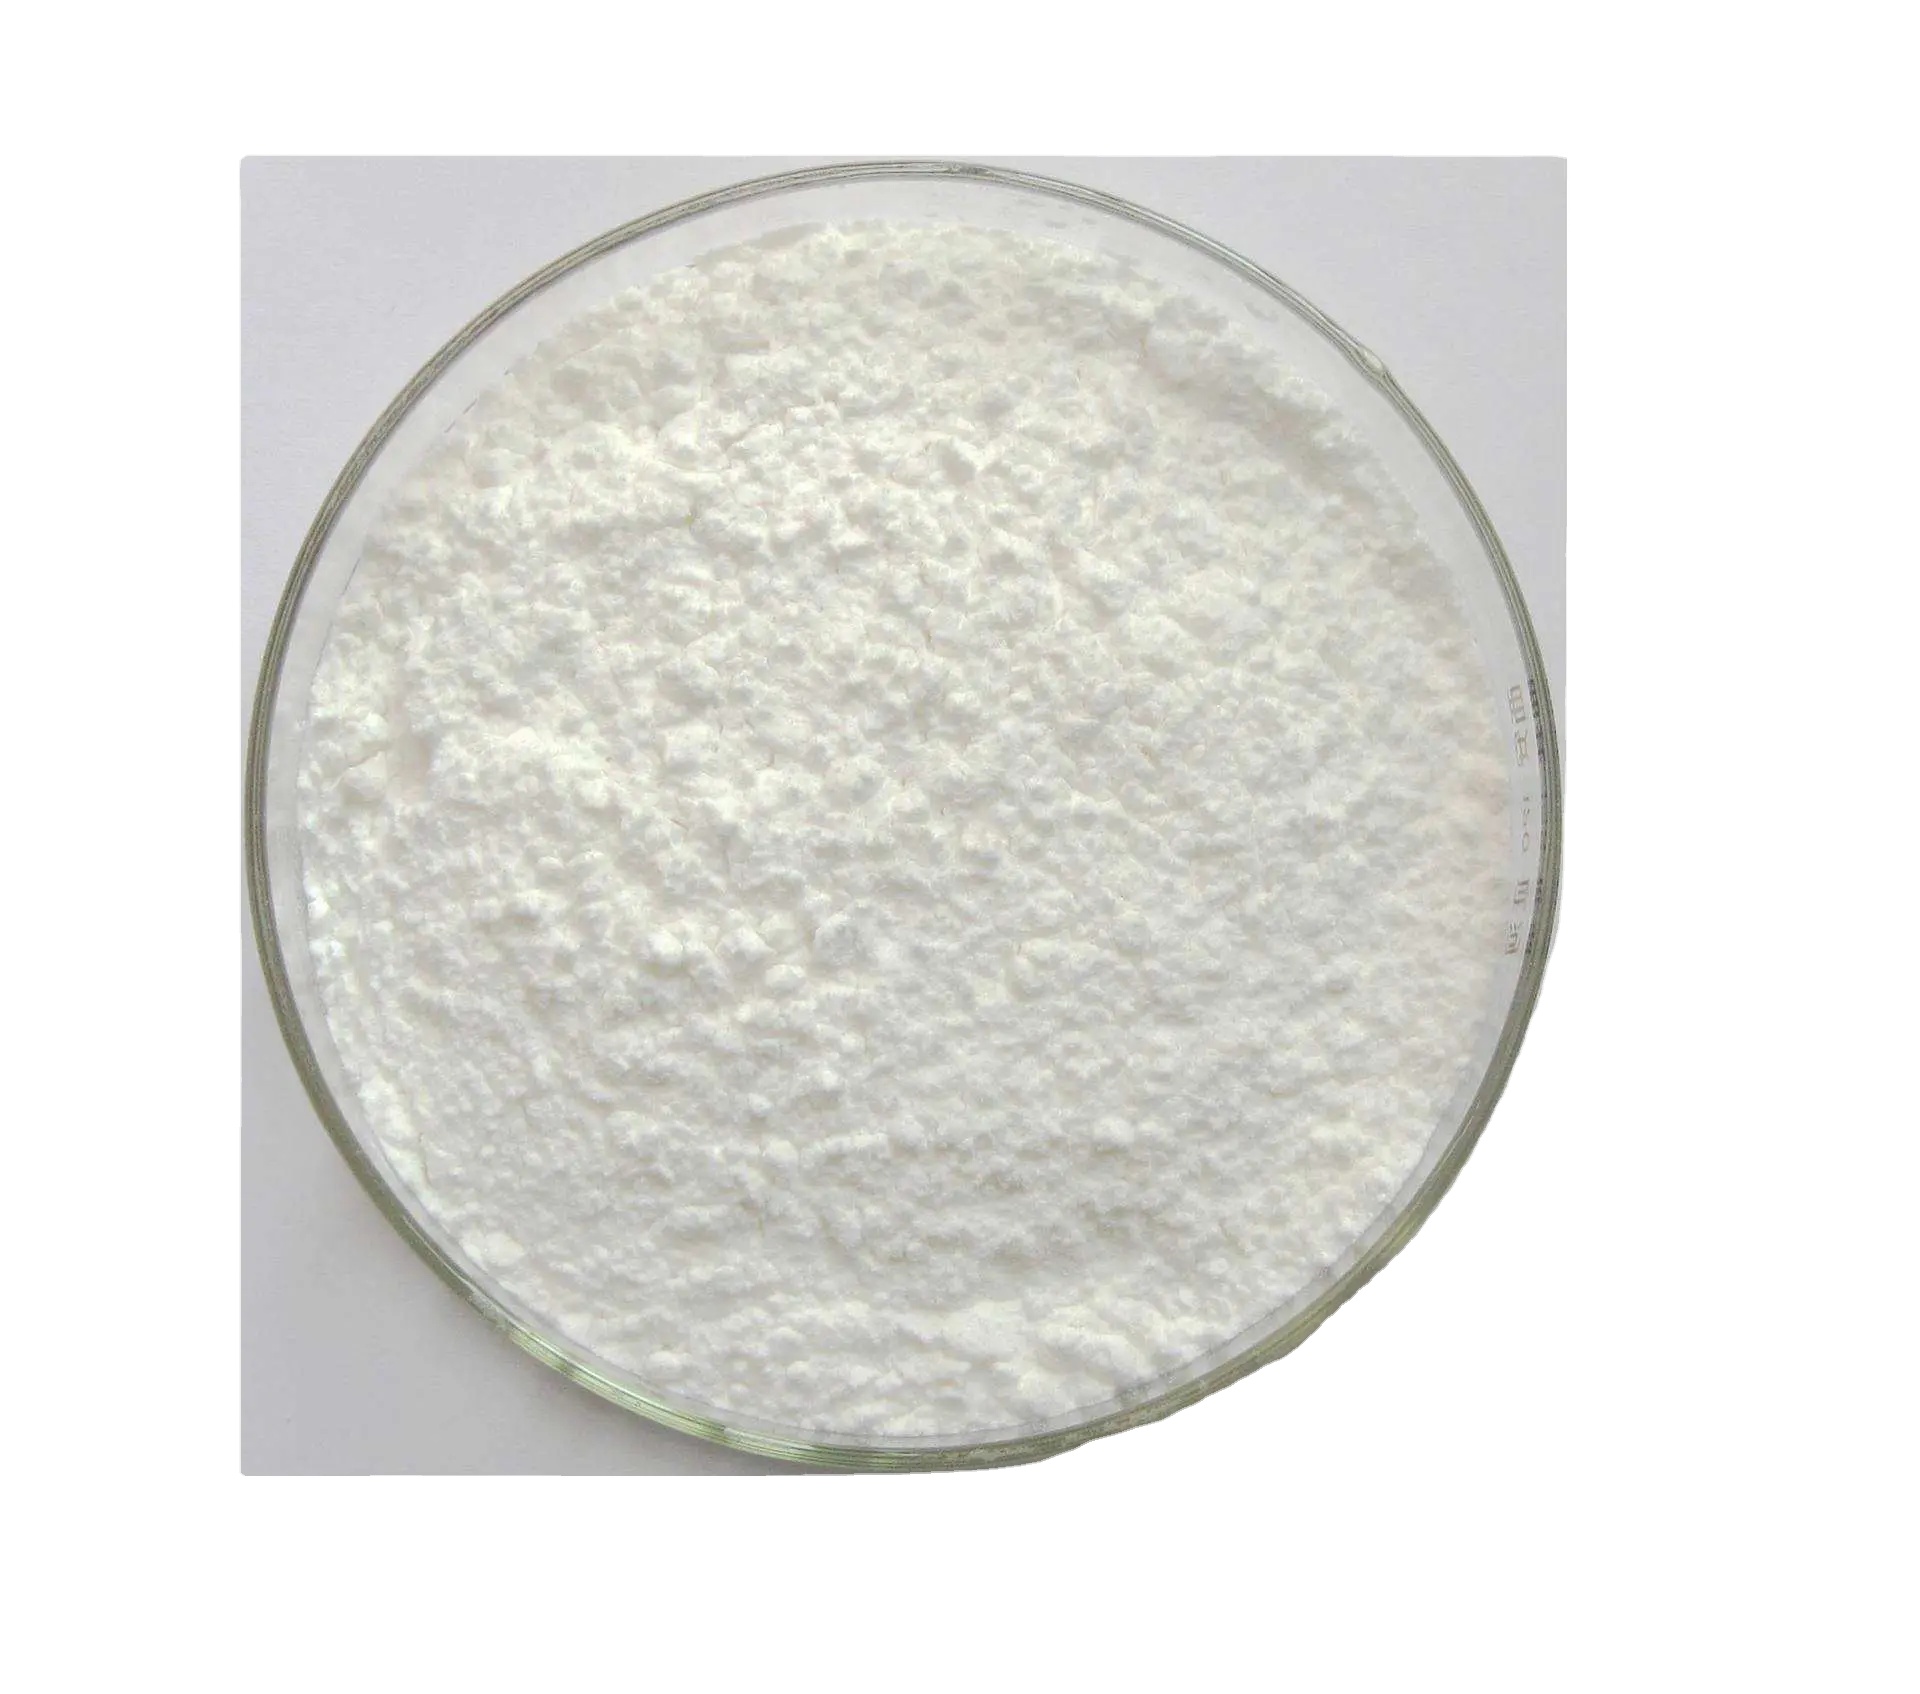 Comprar Agente blanqueador 4,4''-Bis(clorometil)-1,1''-bifenilo Cas1667-10-3, Agente blanqueador 4,4''-Bis(clorometil)-1,1''-bifenilo Cas1667-10-3 Precios, Agente blanqueador 4,4''-Bis(clorometil)-1,1''-bifenilo Cas1667-10-3 Marcas, Agente blanqueador 4,4''-Bis(clorometil)-1,1''-bifenilo Cas1667-10-3 Fabricante, Agente blanqueador 4,4''-Bis(clorometil)-1,1''-bifenilo Cas1667-10-3 Citas, Agente blanqueador 4,4''-Bis(clorometil)-1,1''-bifenilo Cas1667-10-3 Empresa.